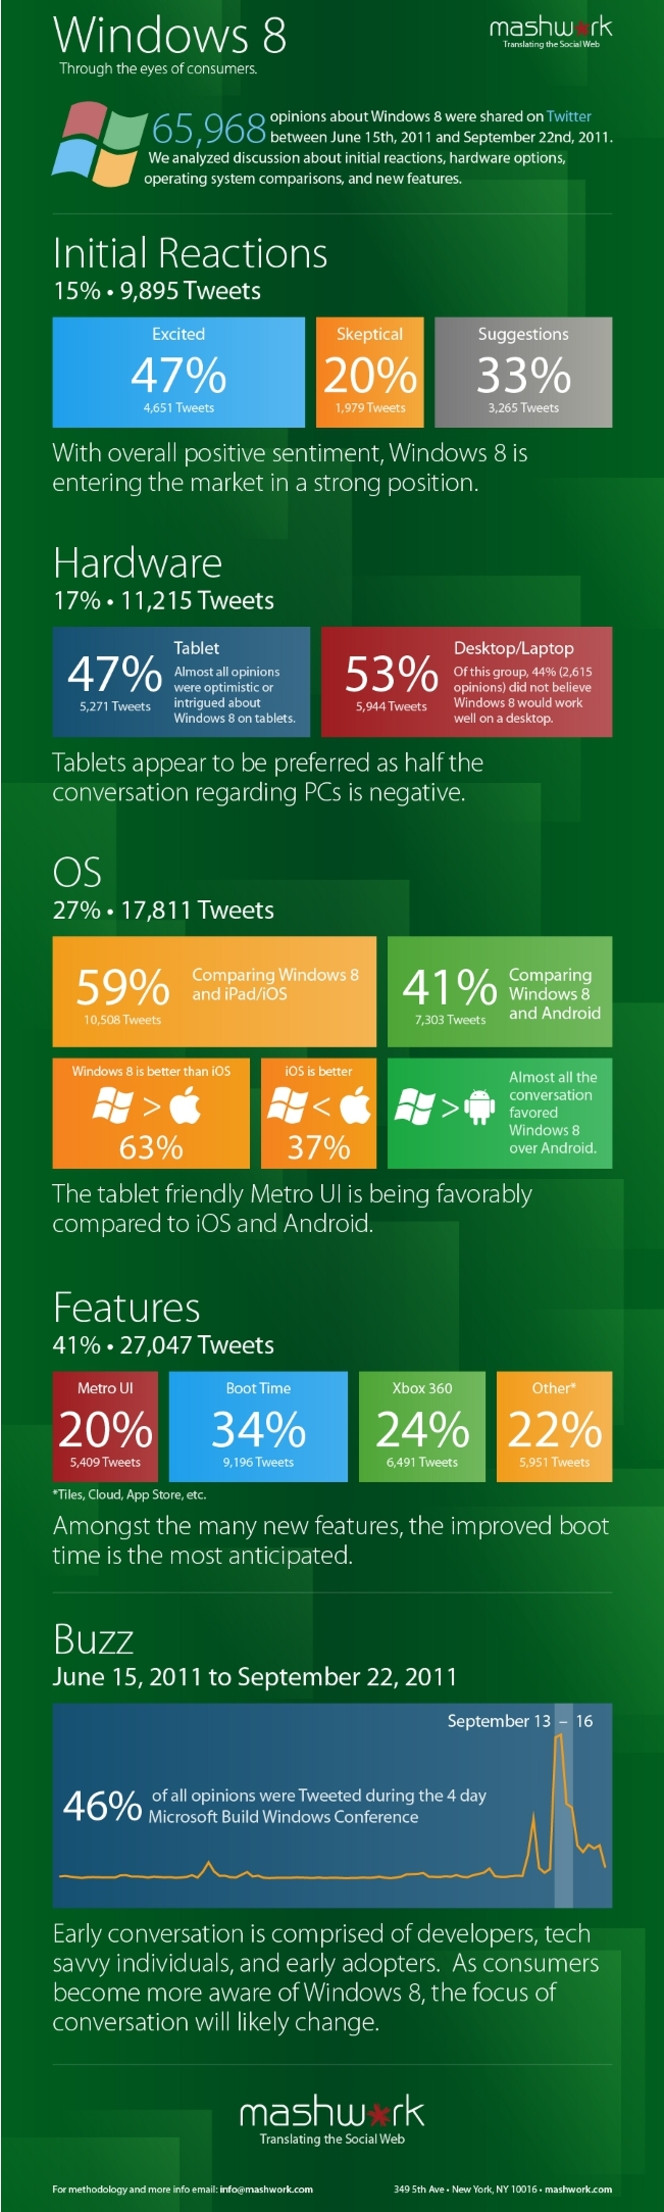 mashwork_windows_infographic